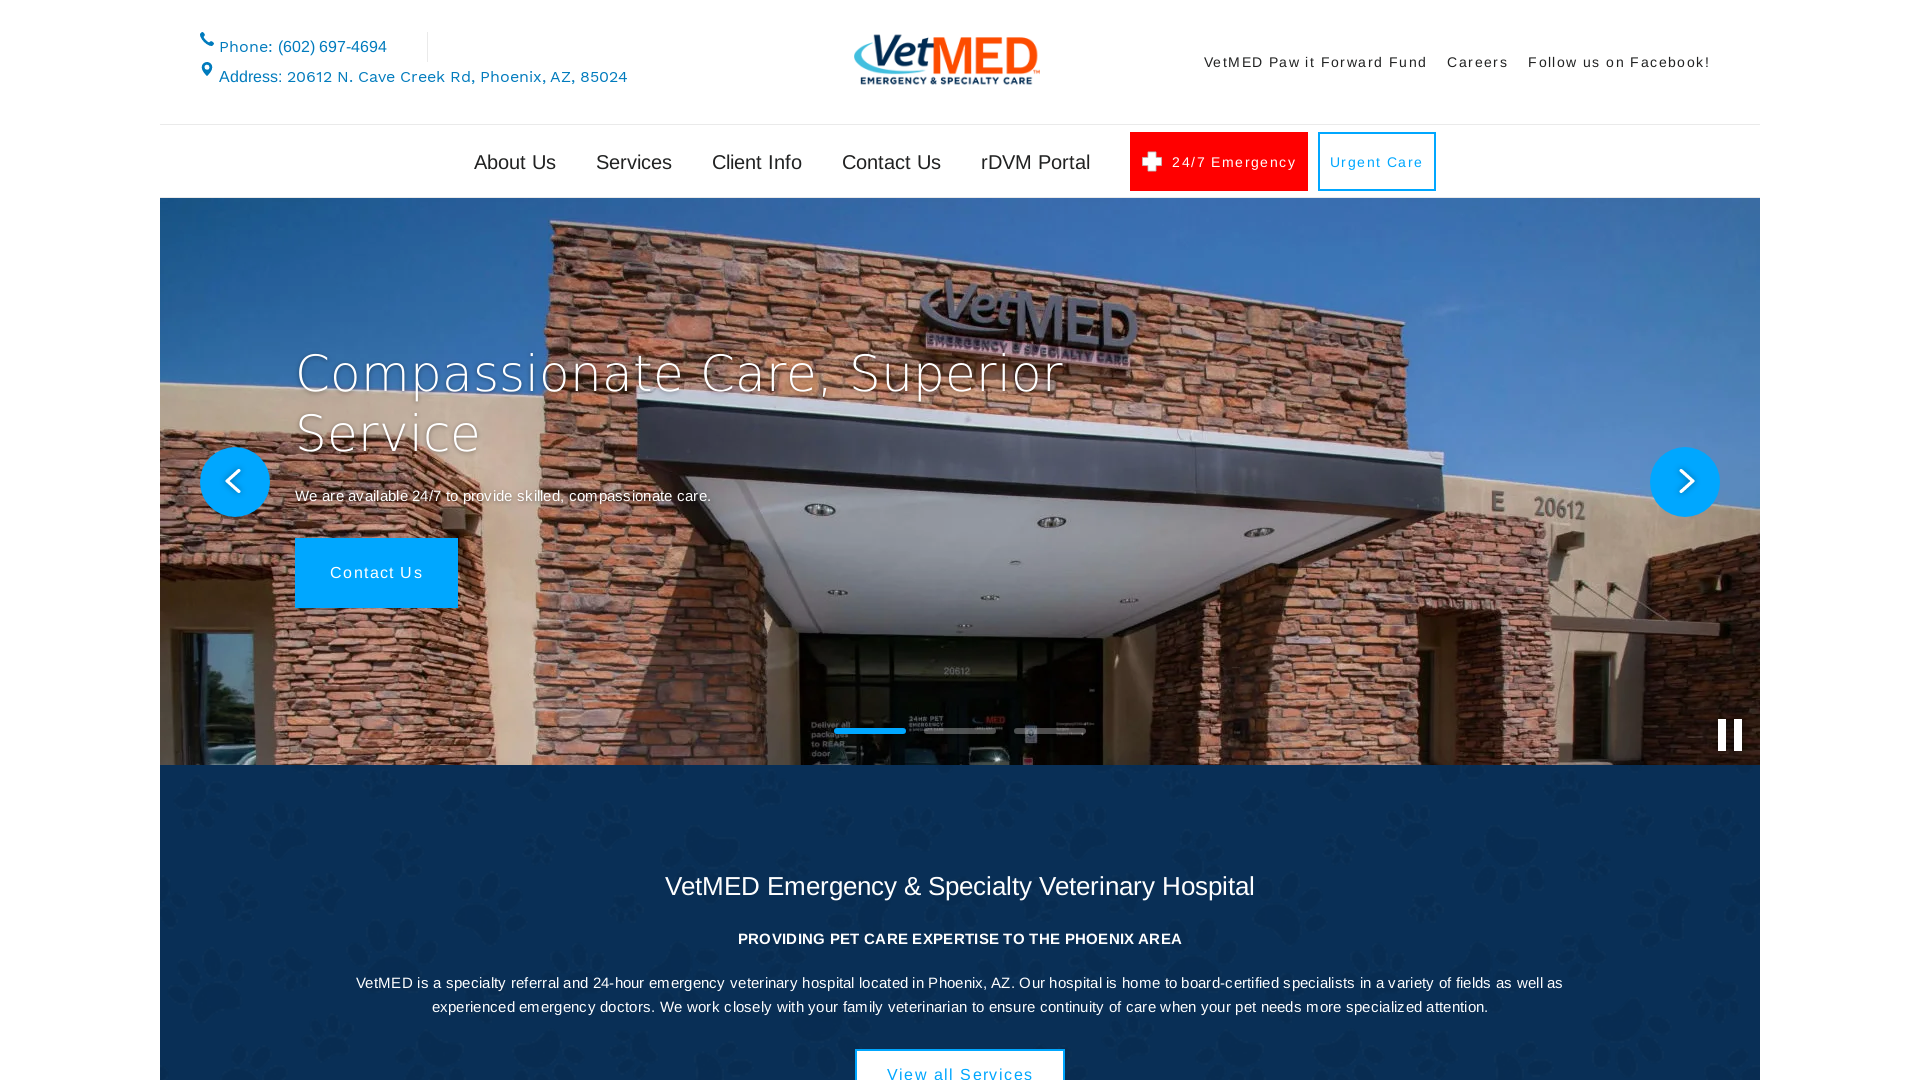 VetMED Emergency & Specialty Veterinary Hospital